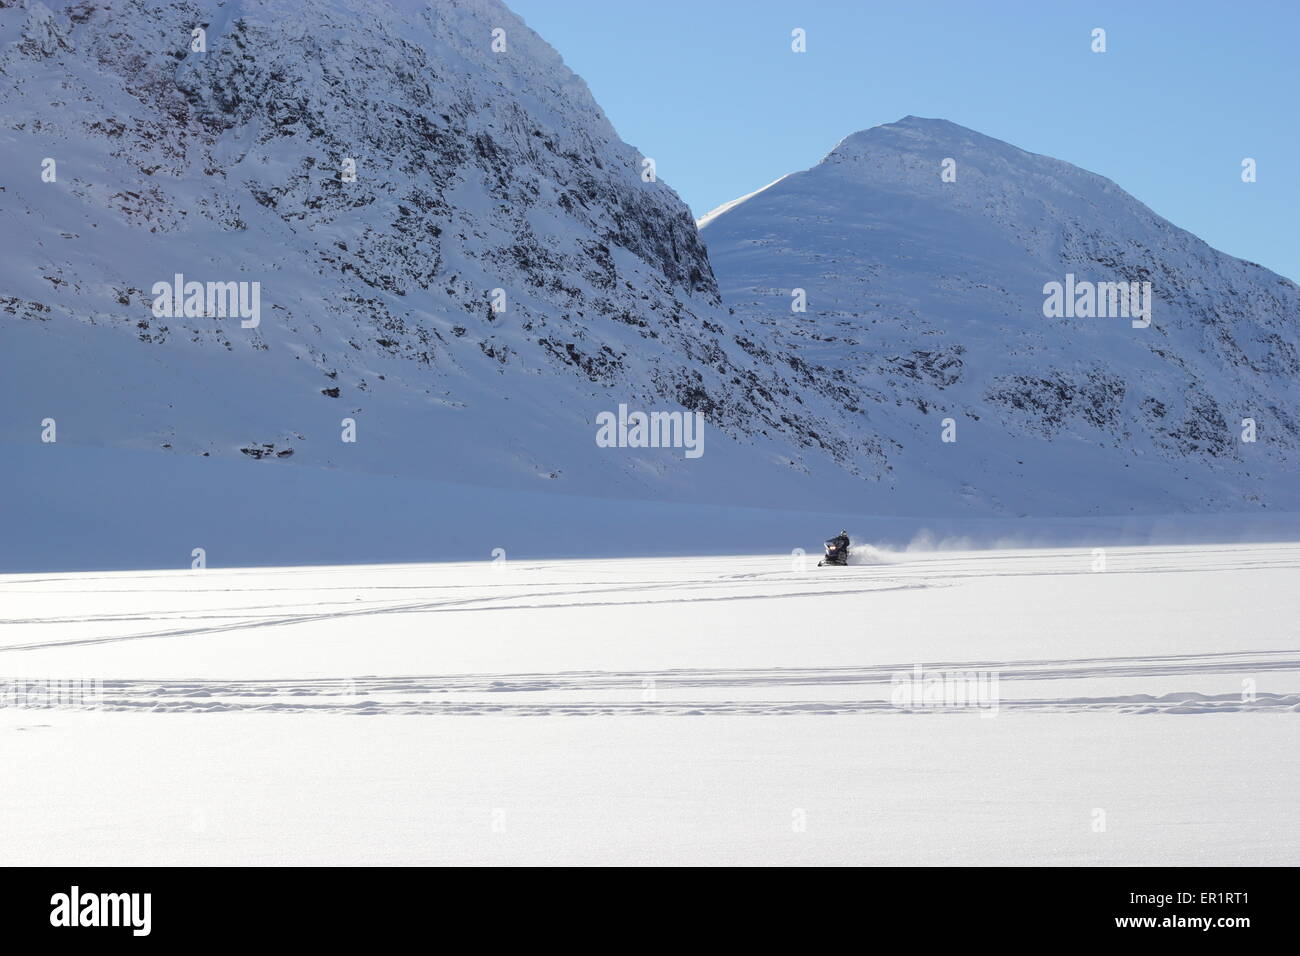 Un snow rider mobile nelle montagne innevate, Finndalsvatnet, Norvegia Foto Stock